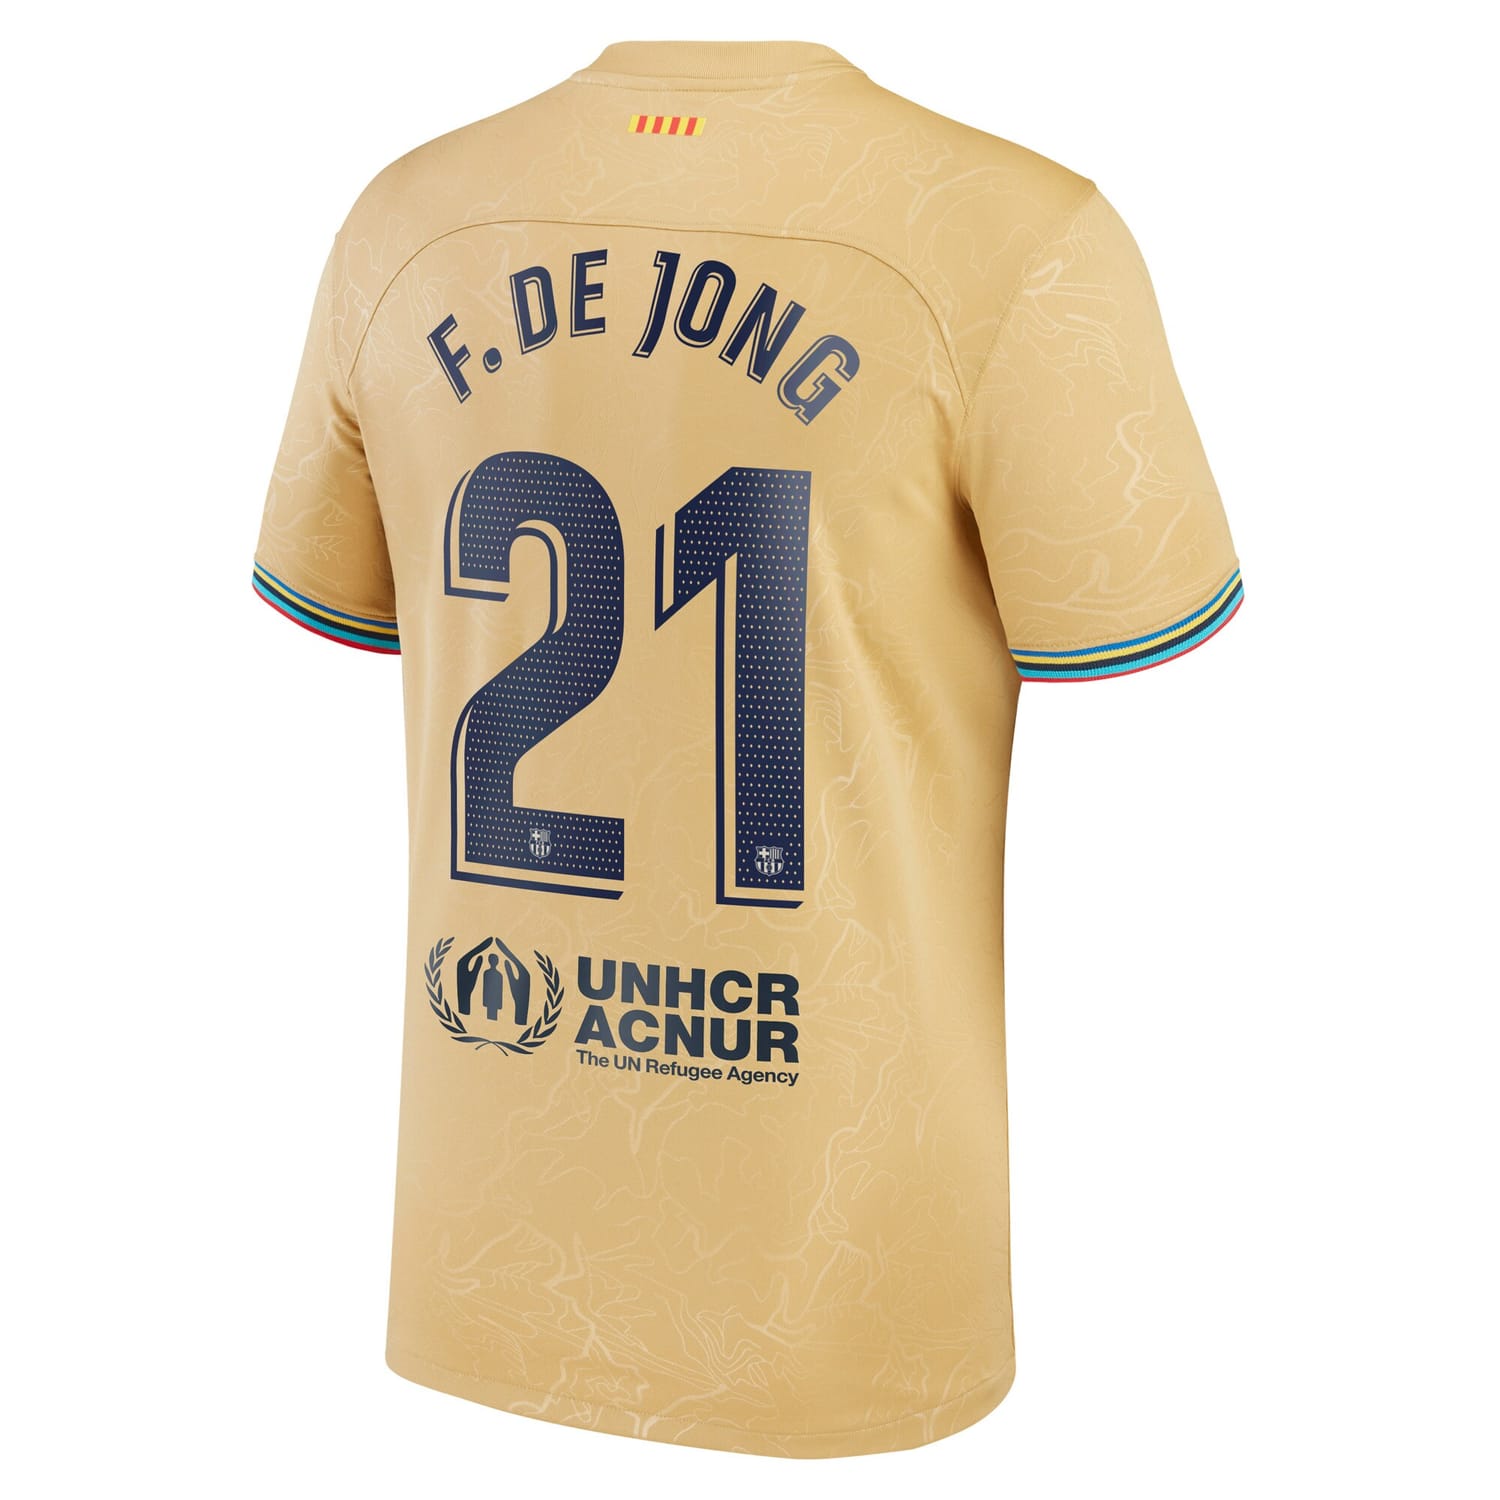 La Liga Barcelona Away Jersey Shirt Yellow 2022-23 player Frenkie de Jong printing for Men